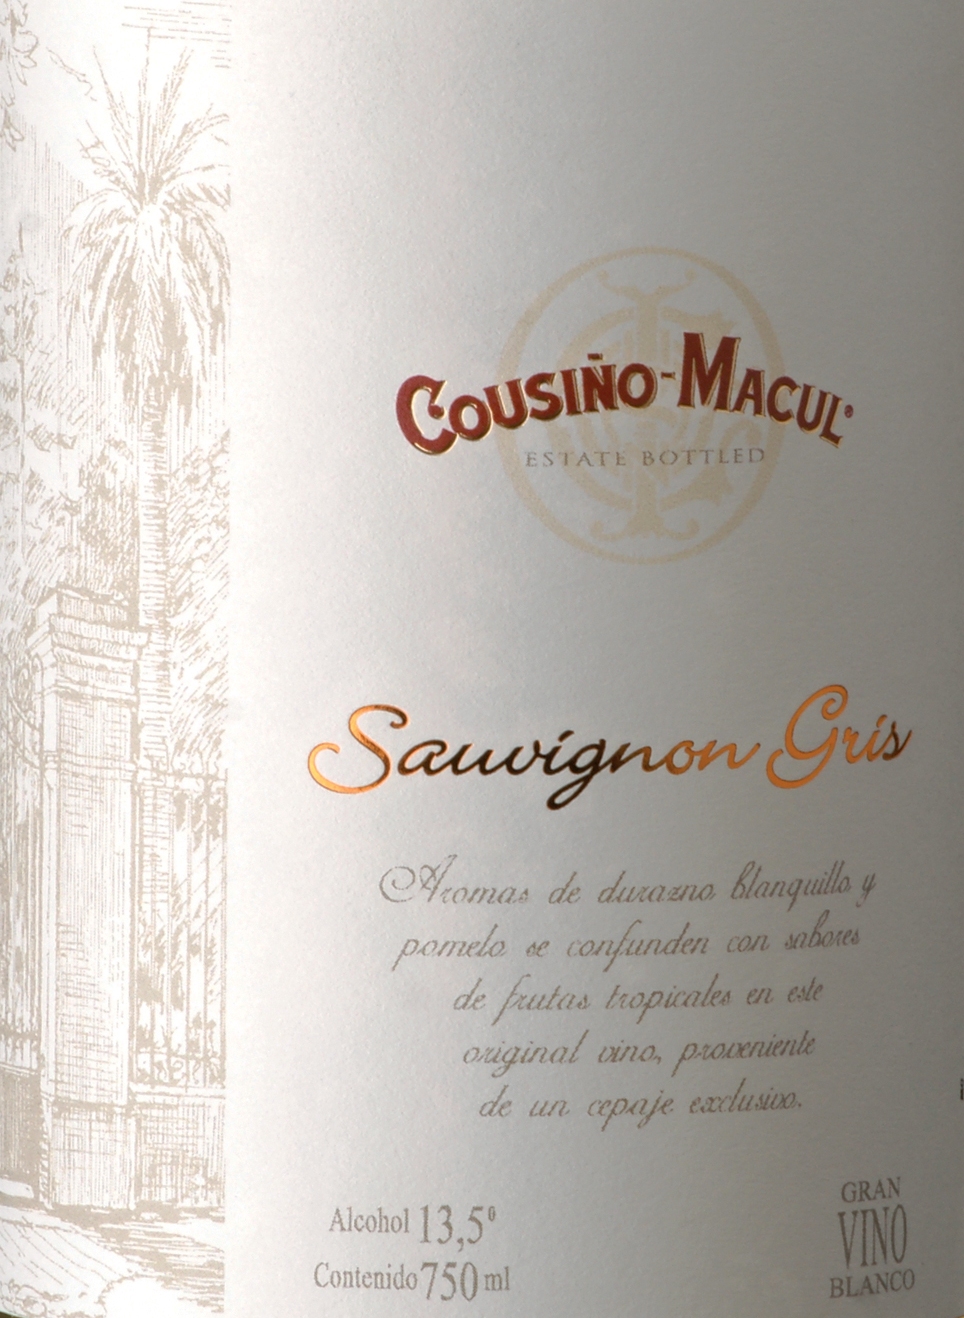 2021 Cousino Macul Sauvignon Gris - click image for full description